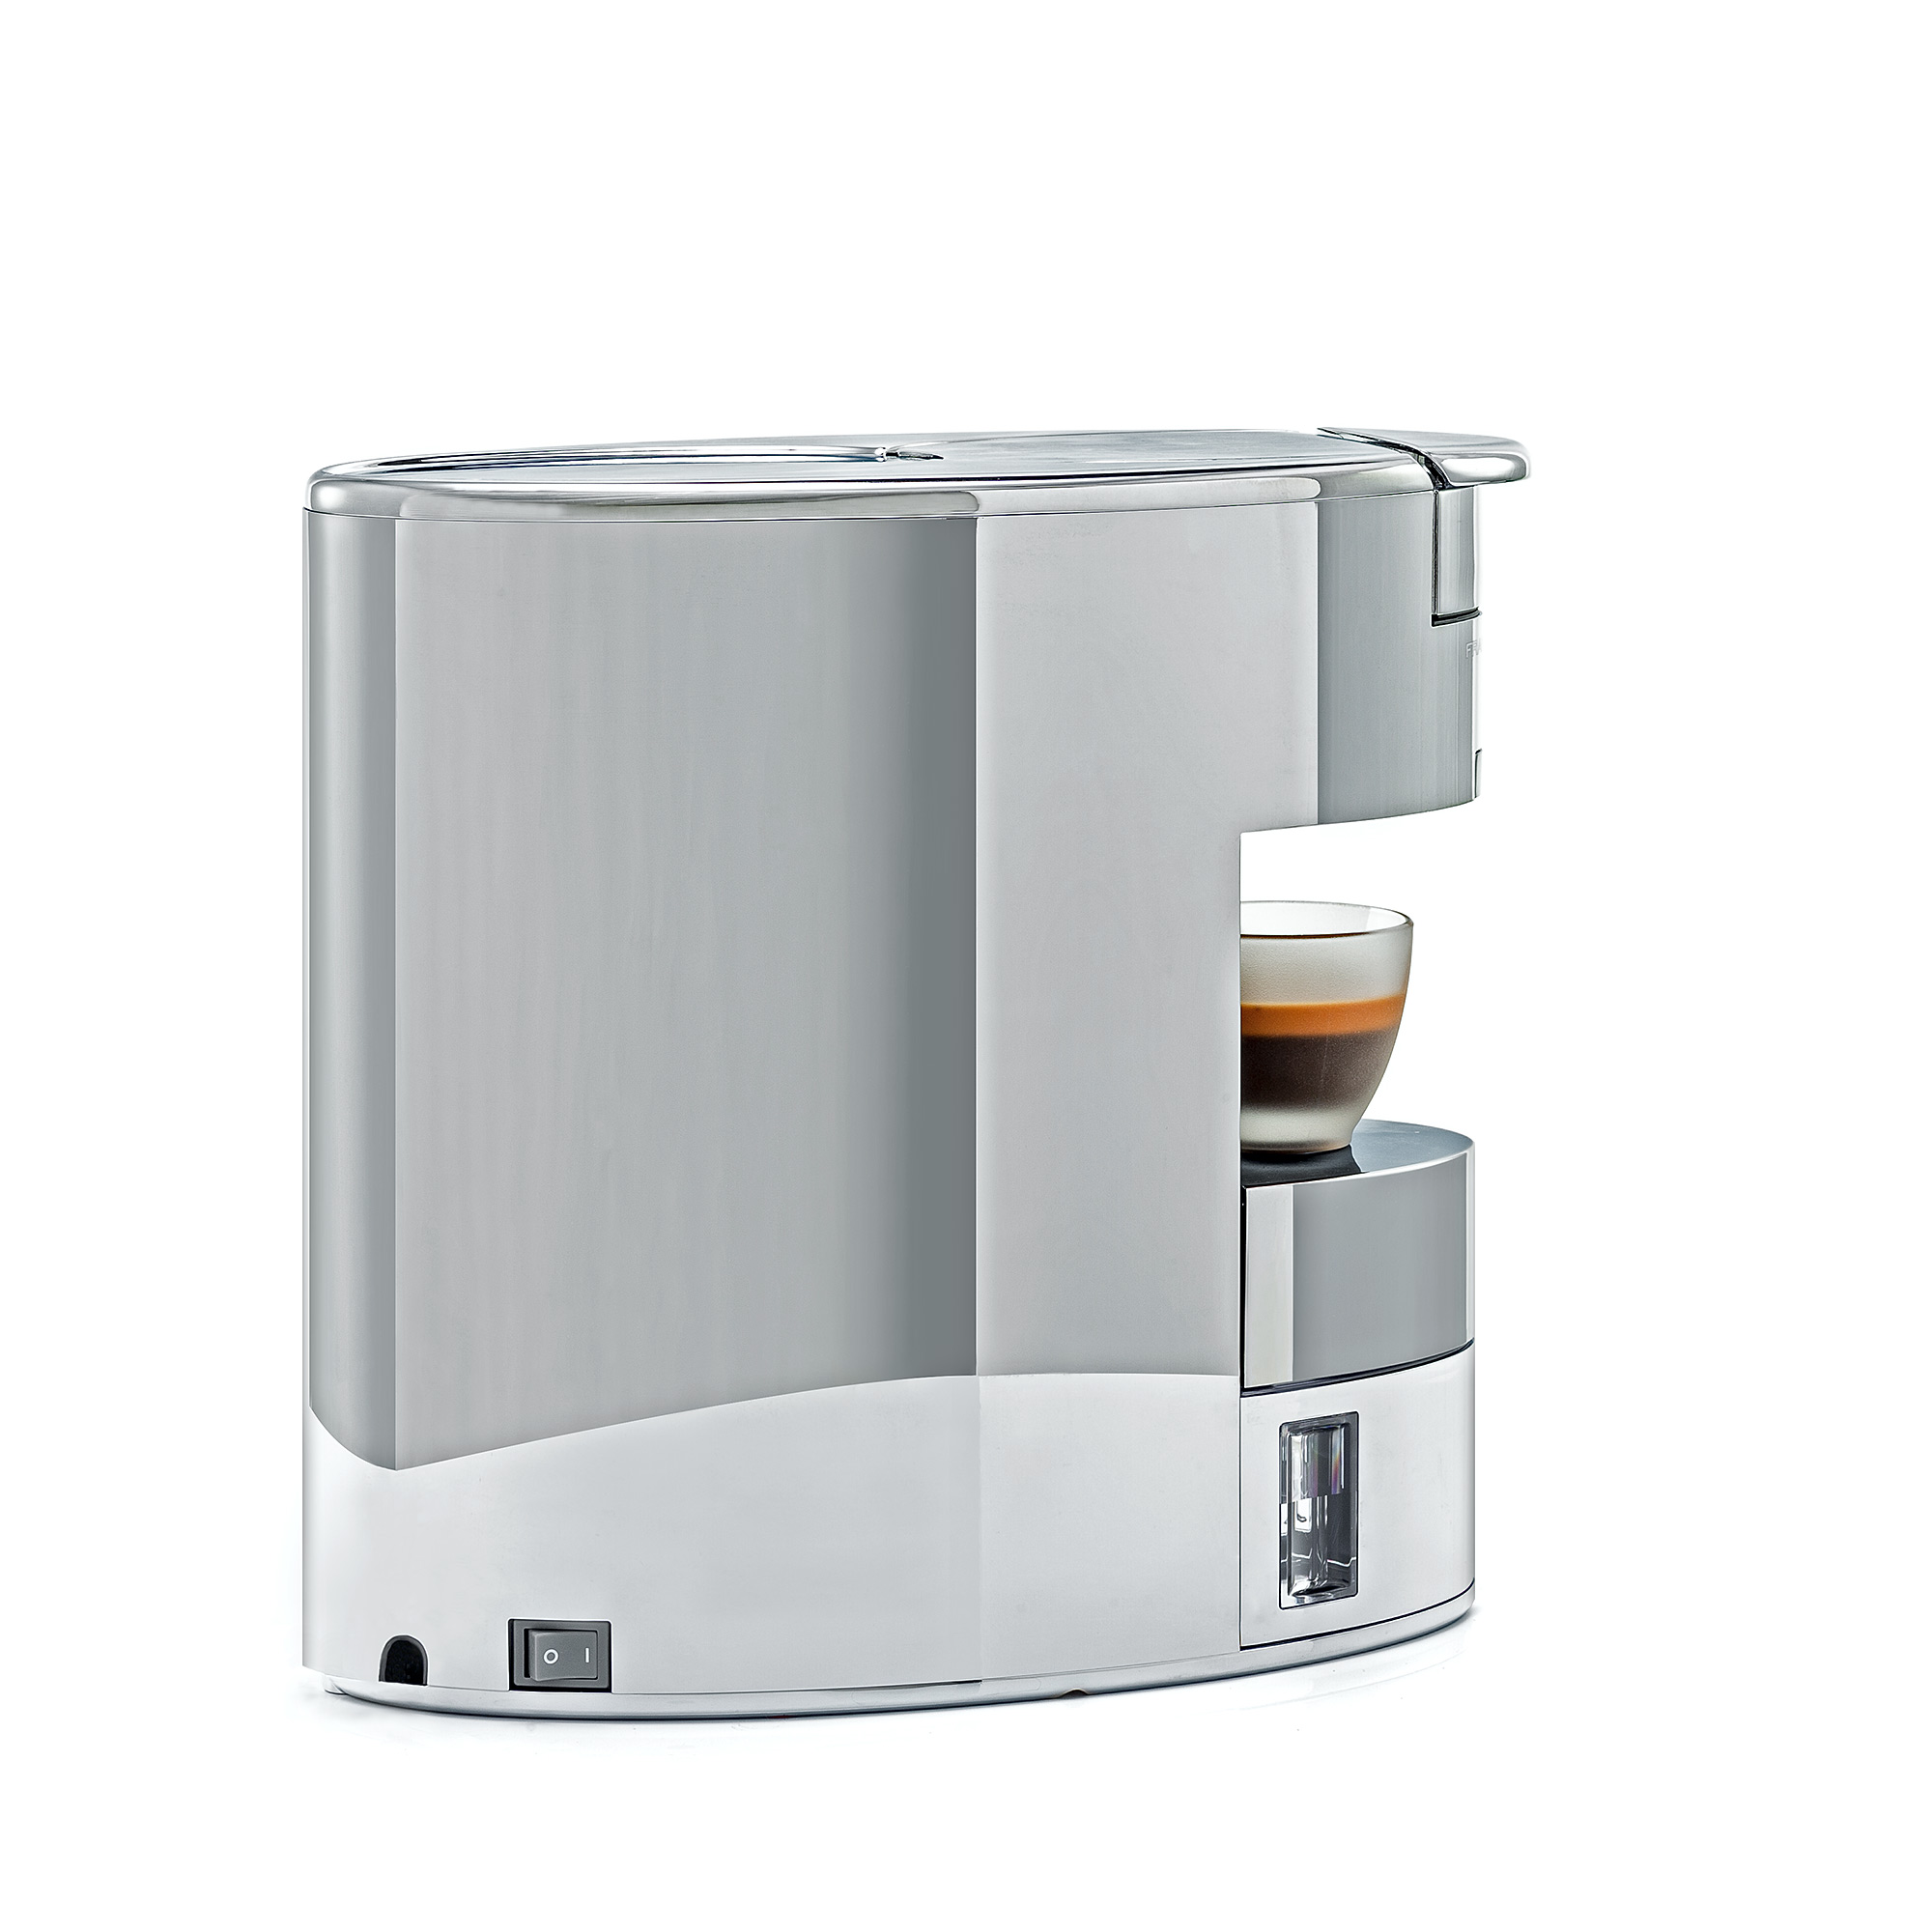 X9 – Iperespresso koffiemachine